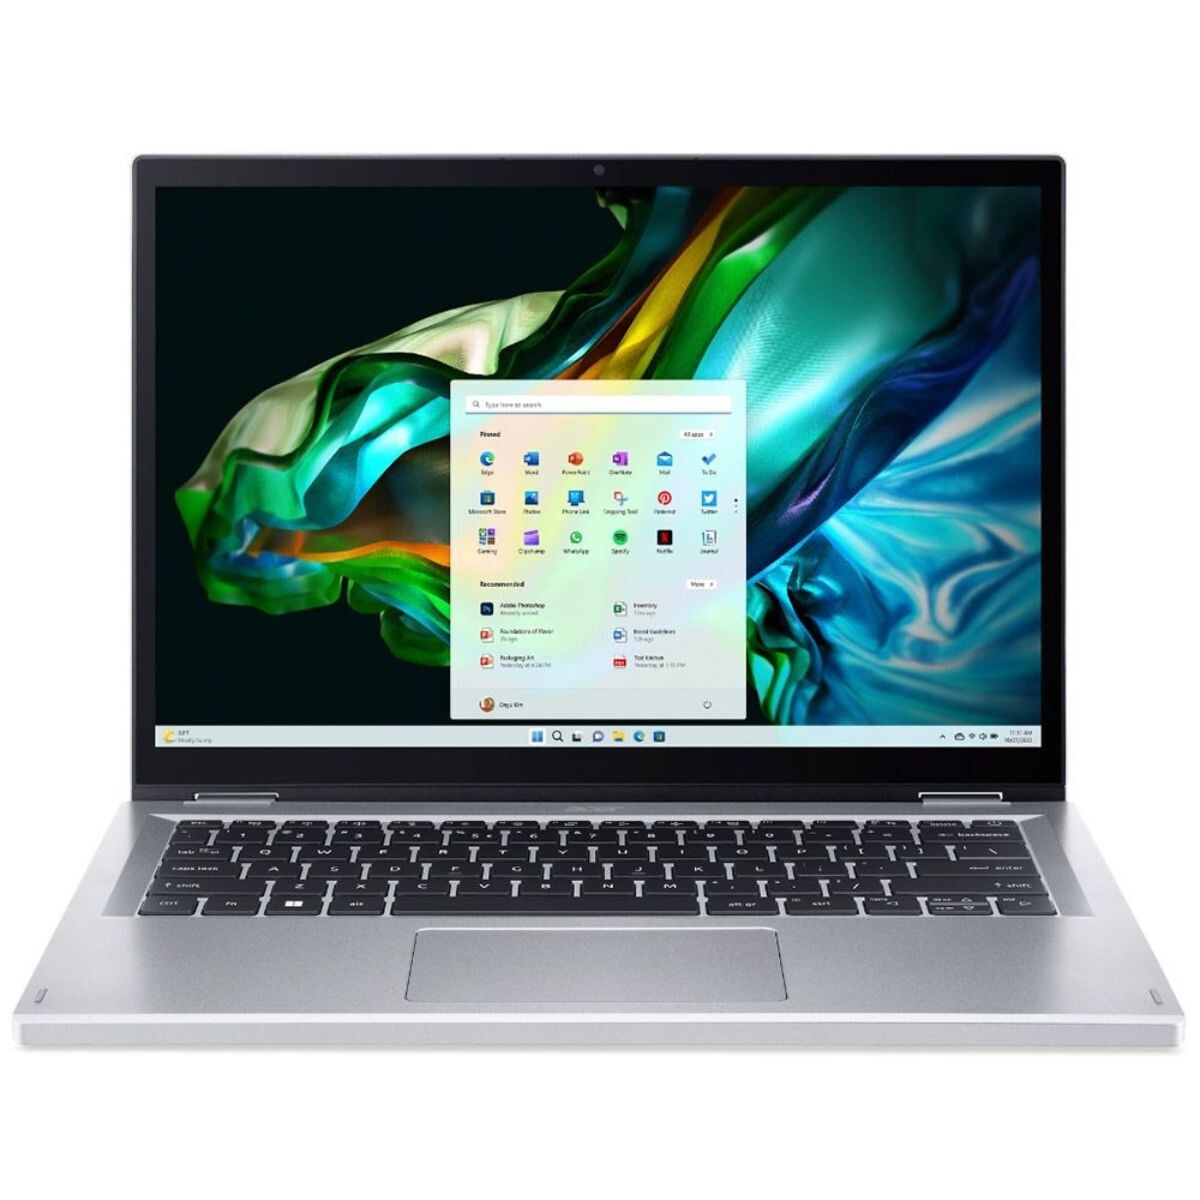 Notebook Acer Touch I3 N305 256GB reacondicionada 